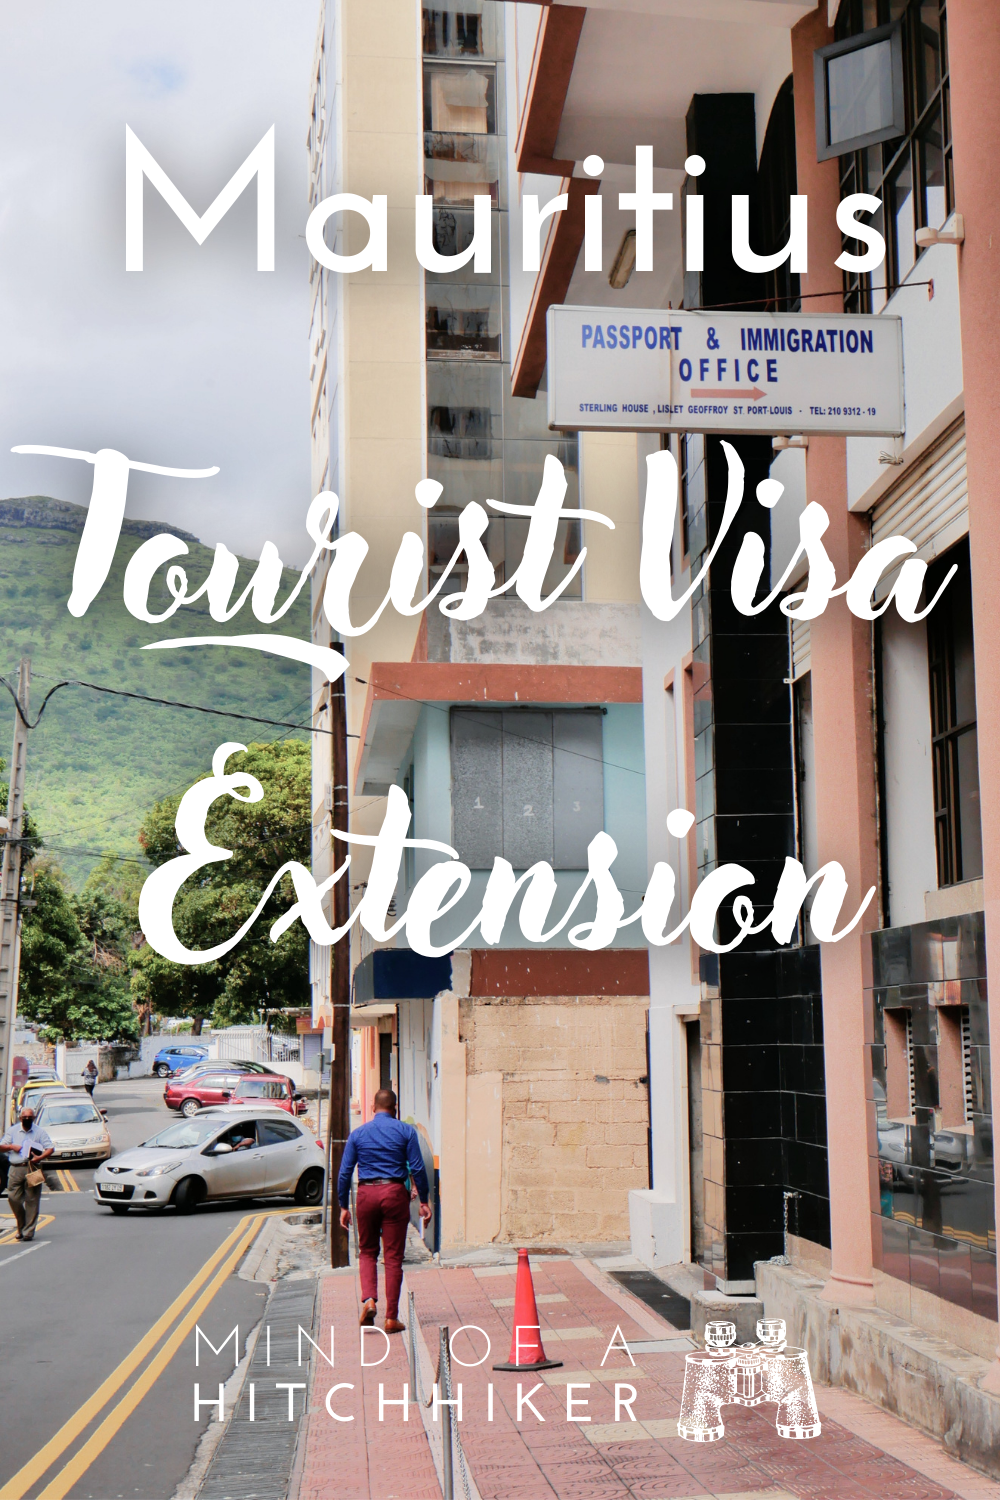 Passport and immigration office Mauritius tourist visa extension Port Louis